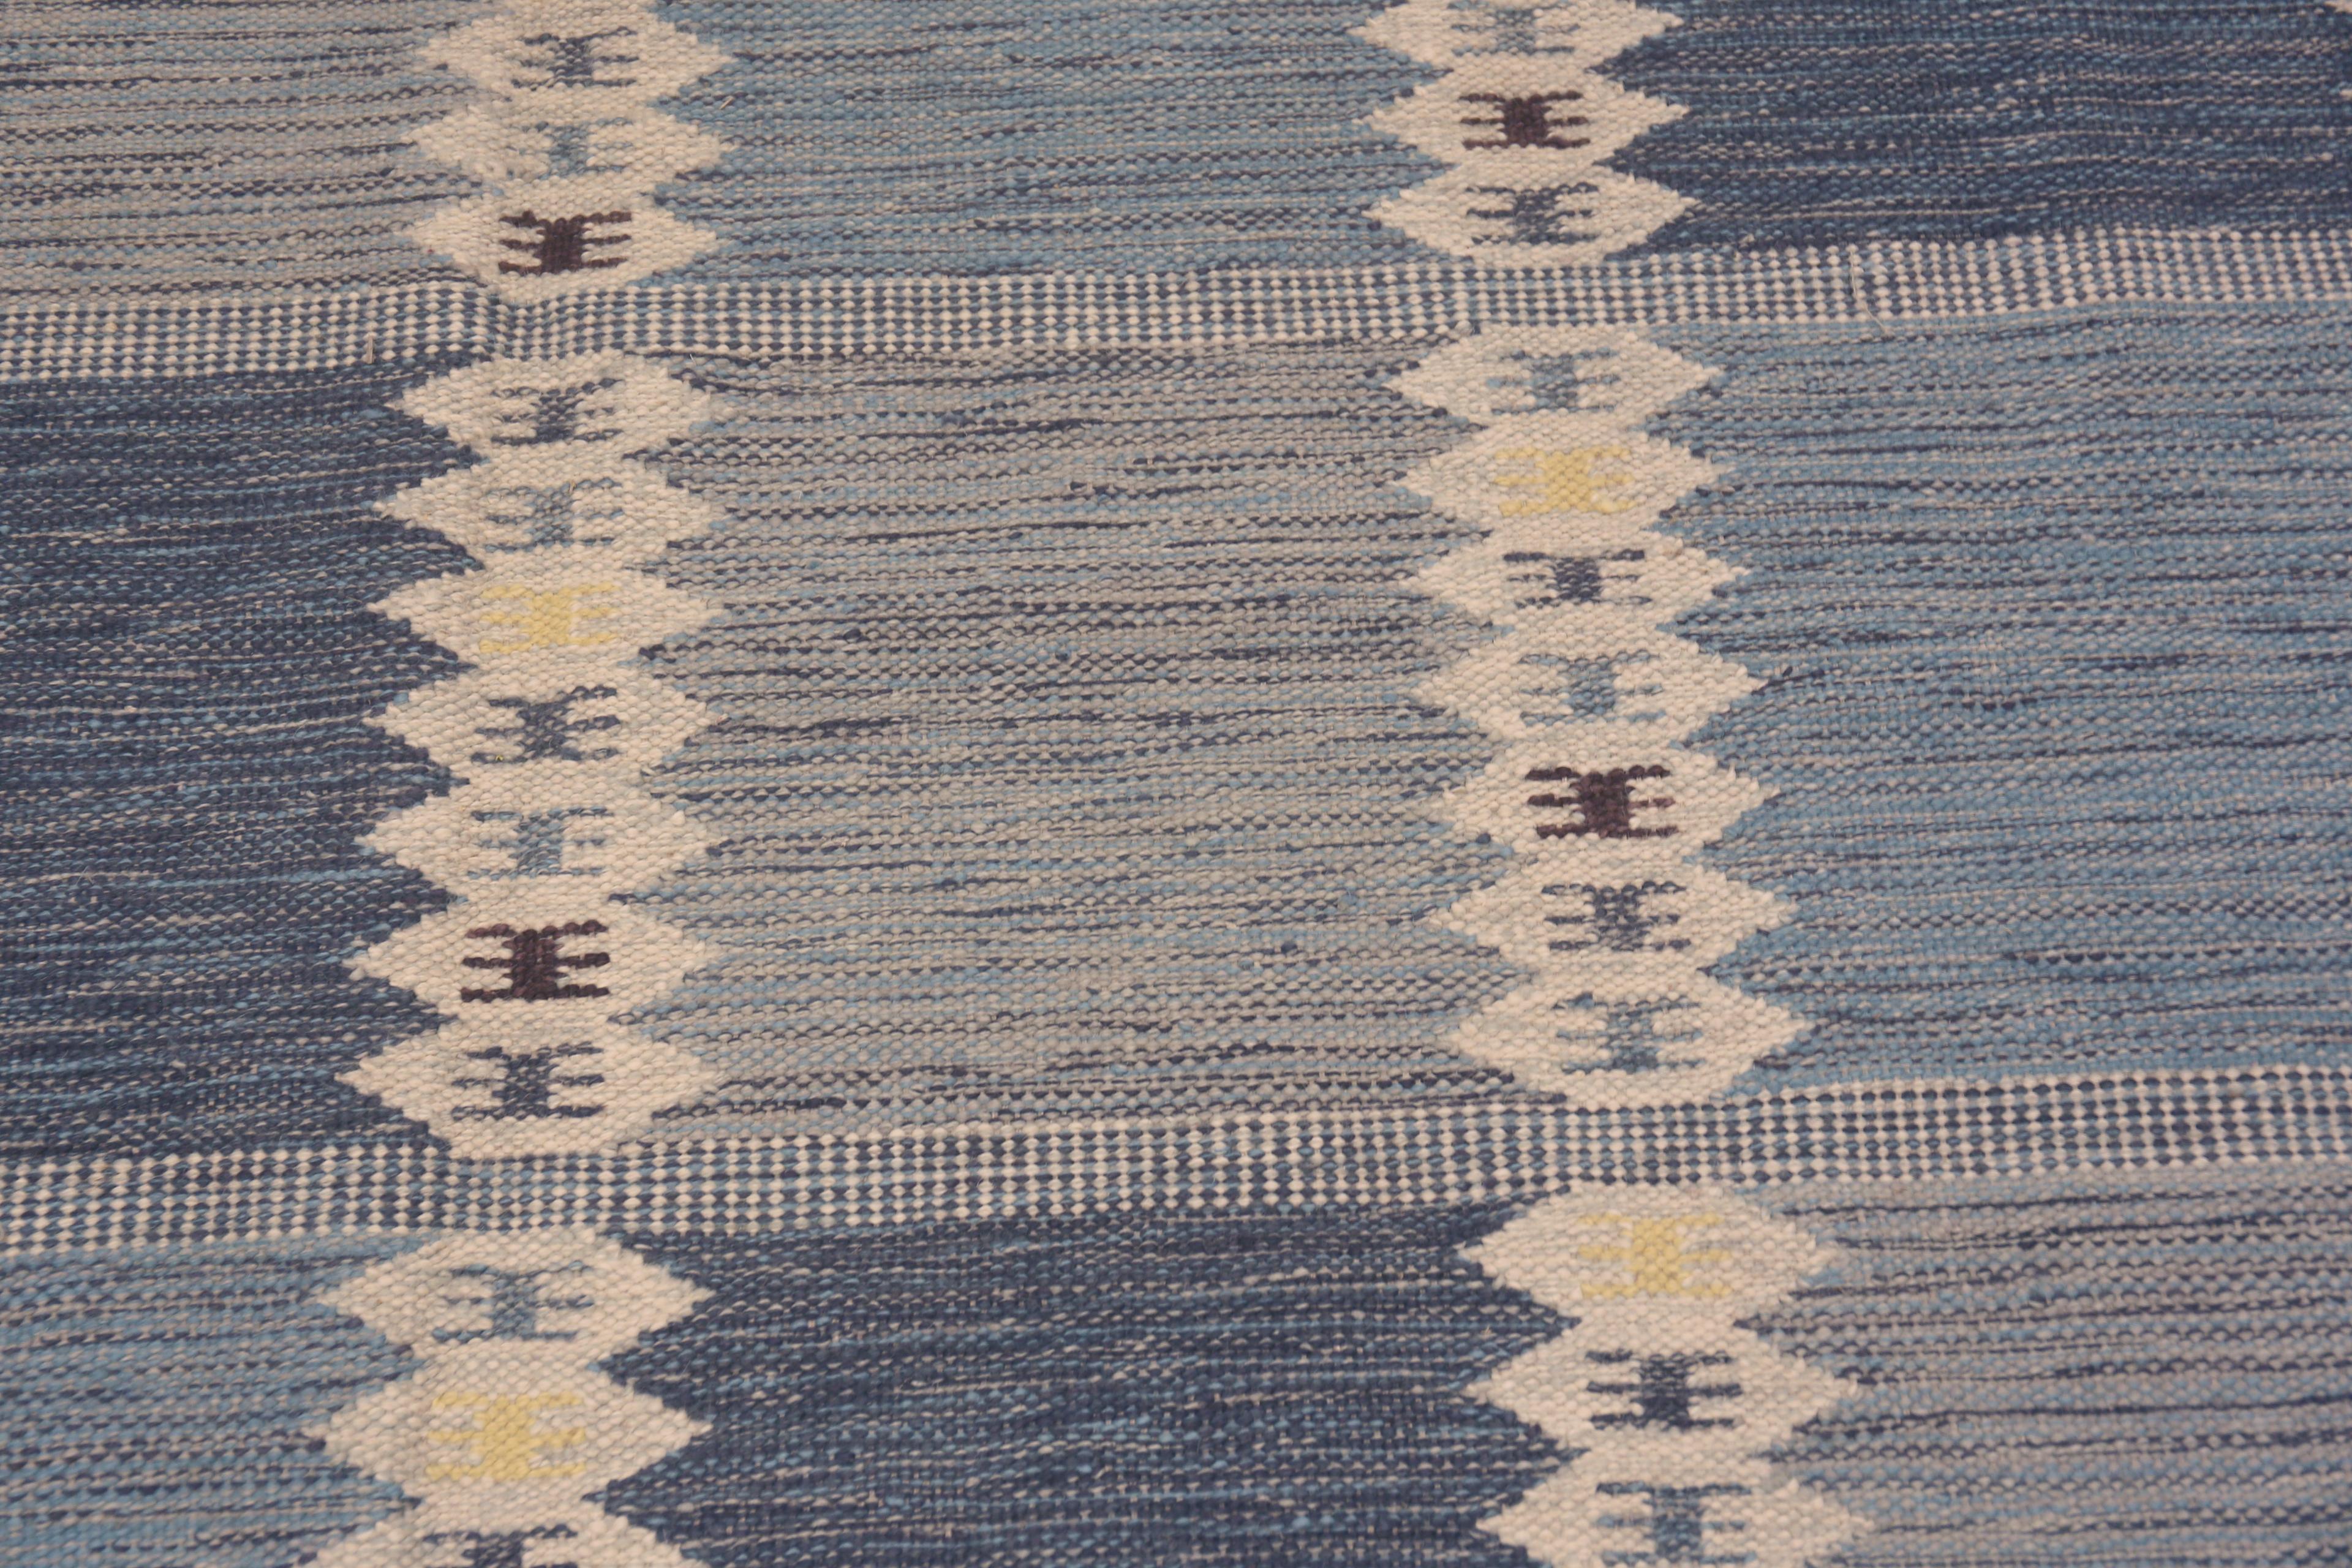 Wool Nazmiyal Collection Swedish Mid-Century Modern Room Size Kilim Rug 9' x 12'10